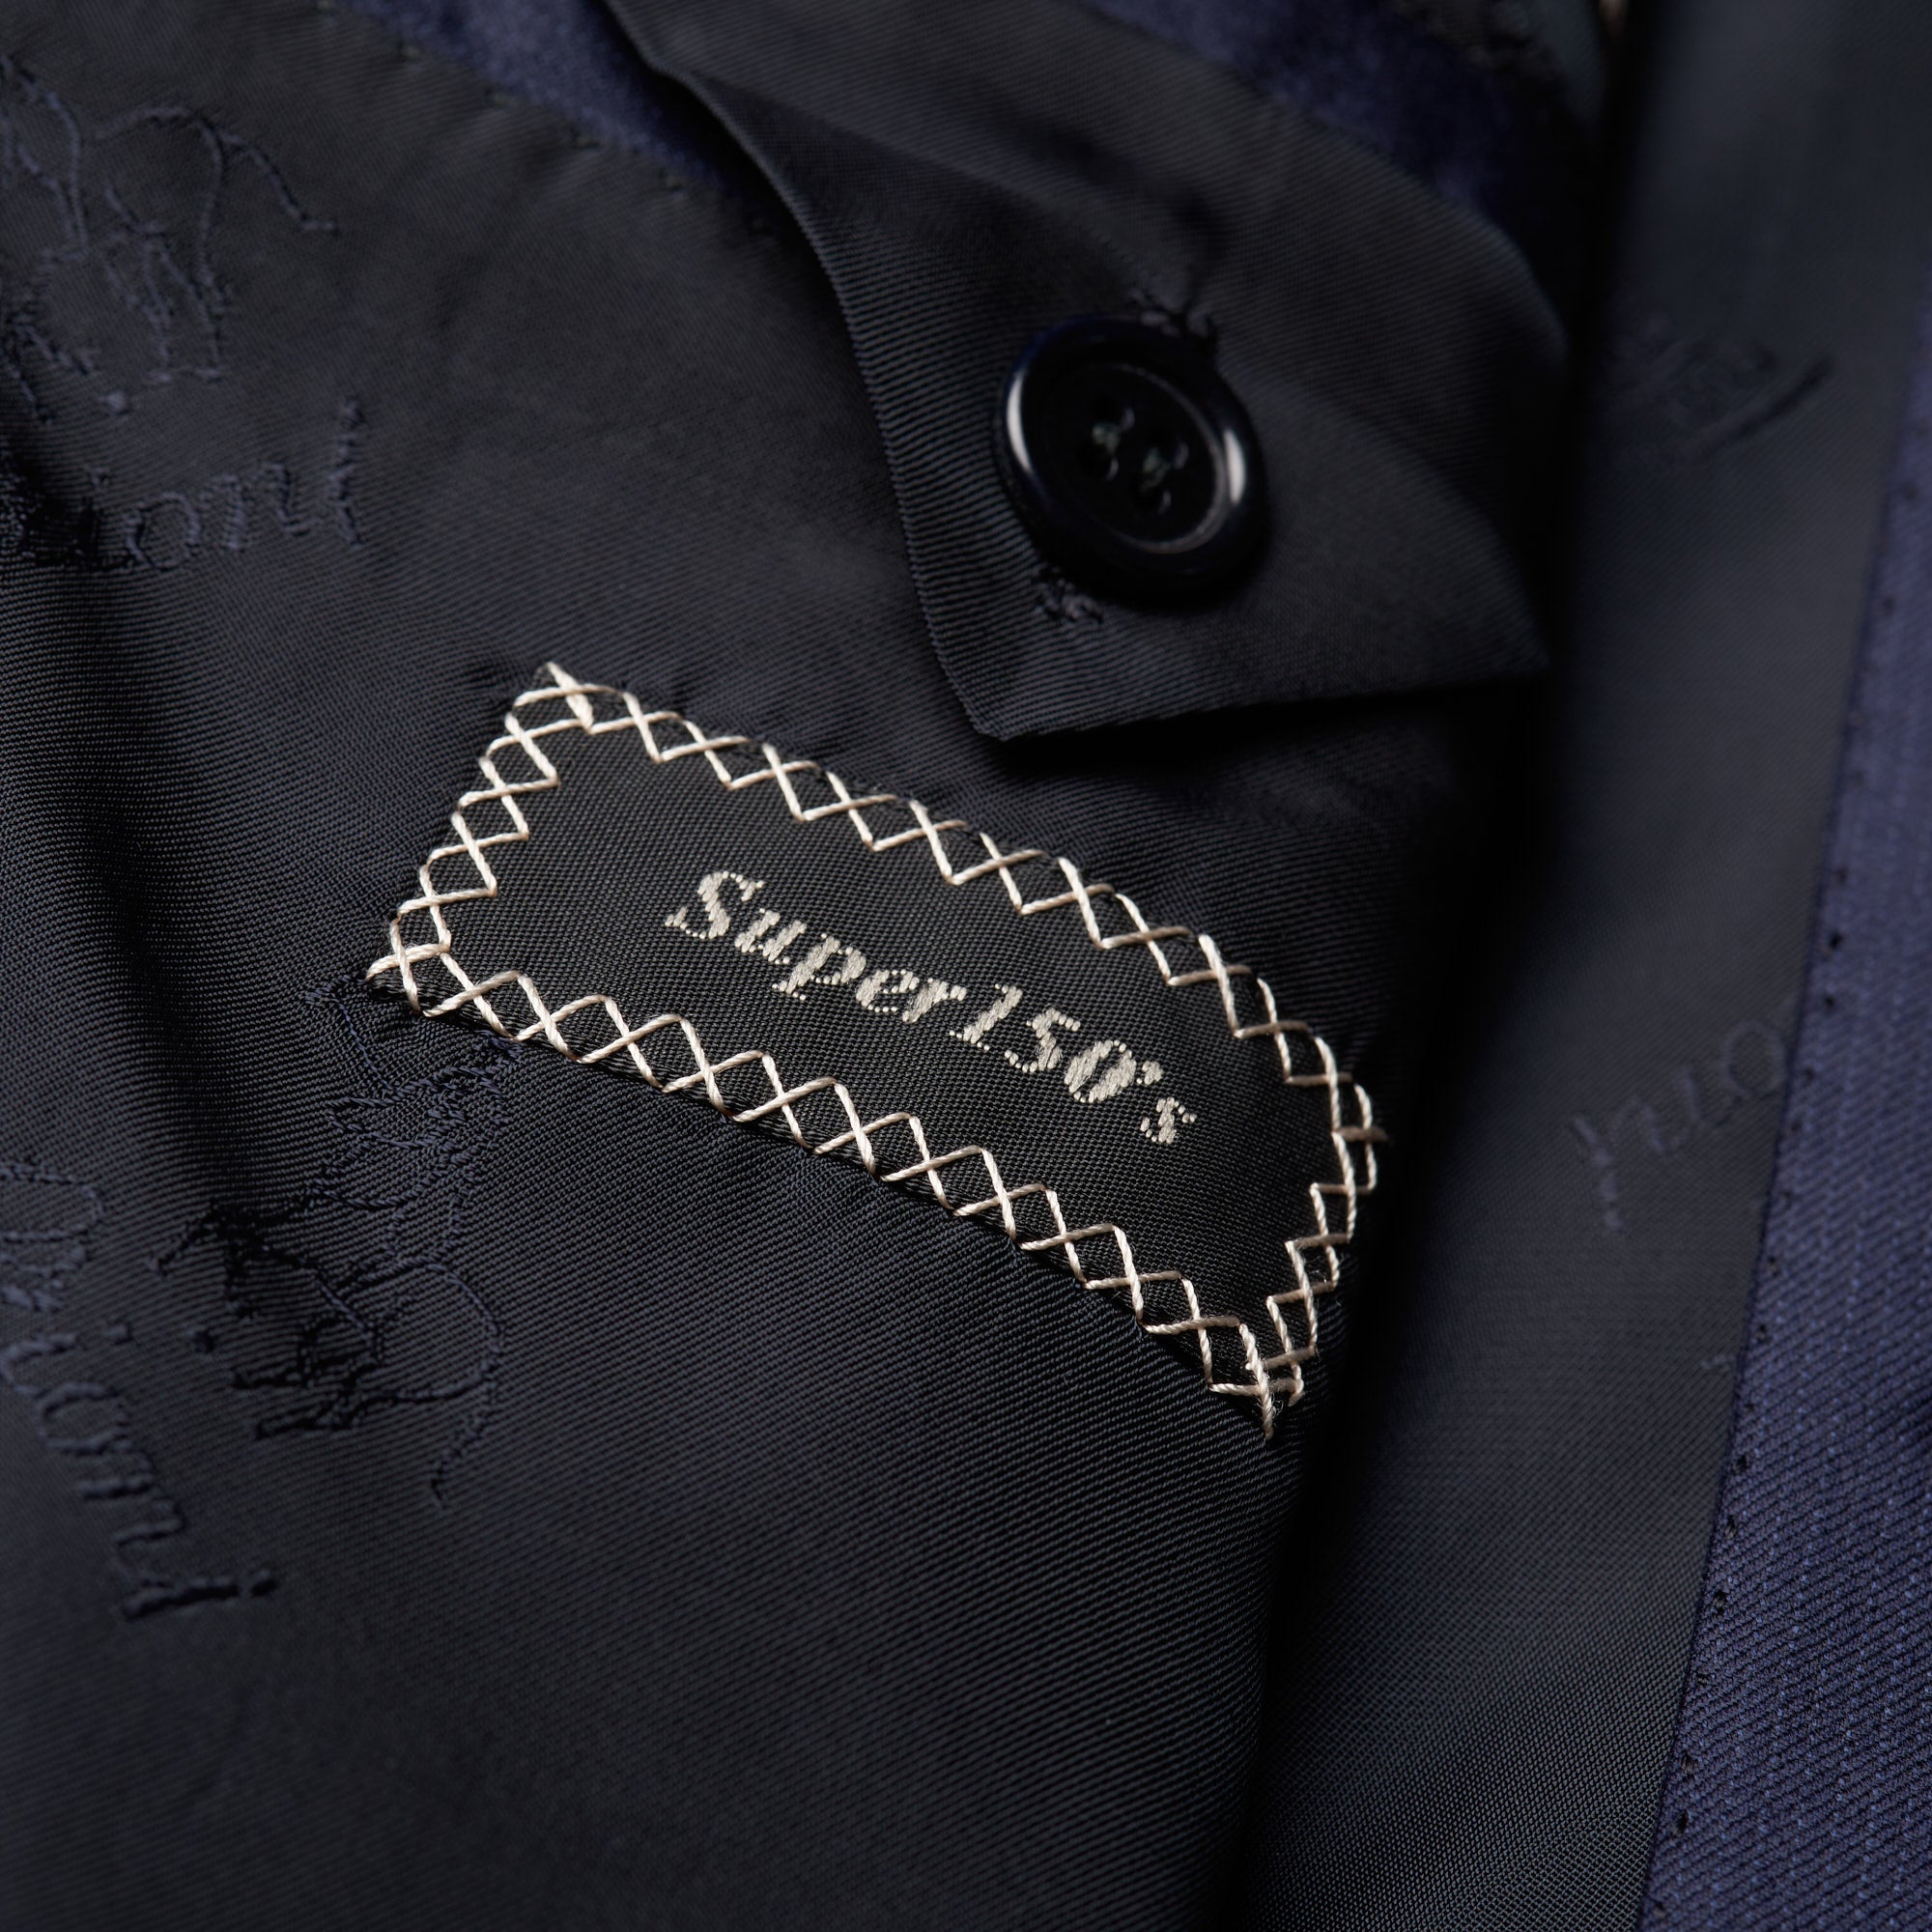 BRIONI "CHIGI" Handmade Blue Wool Super 150's Suit US 48 NEW EU 58 BRIONI